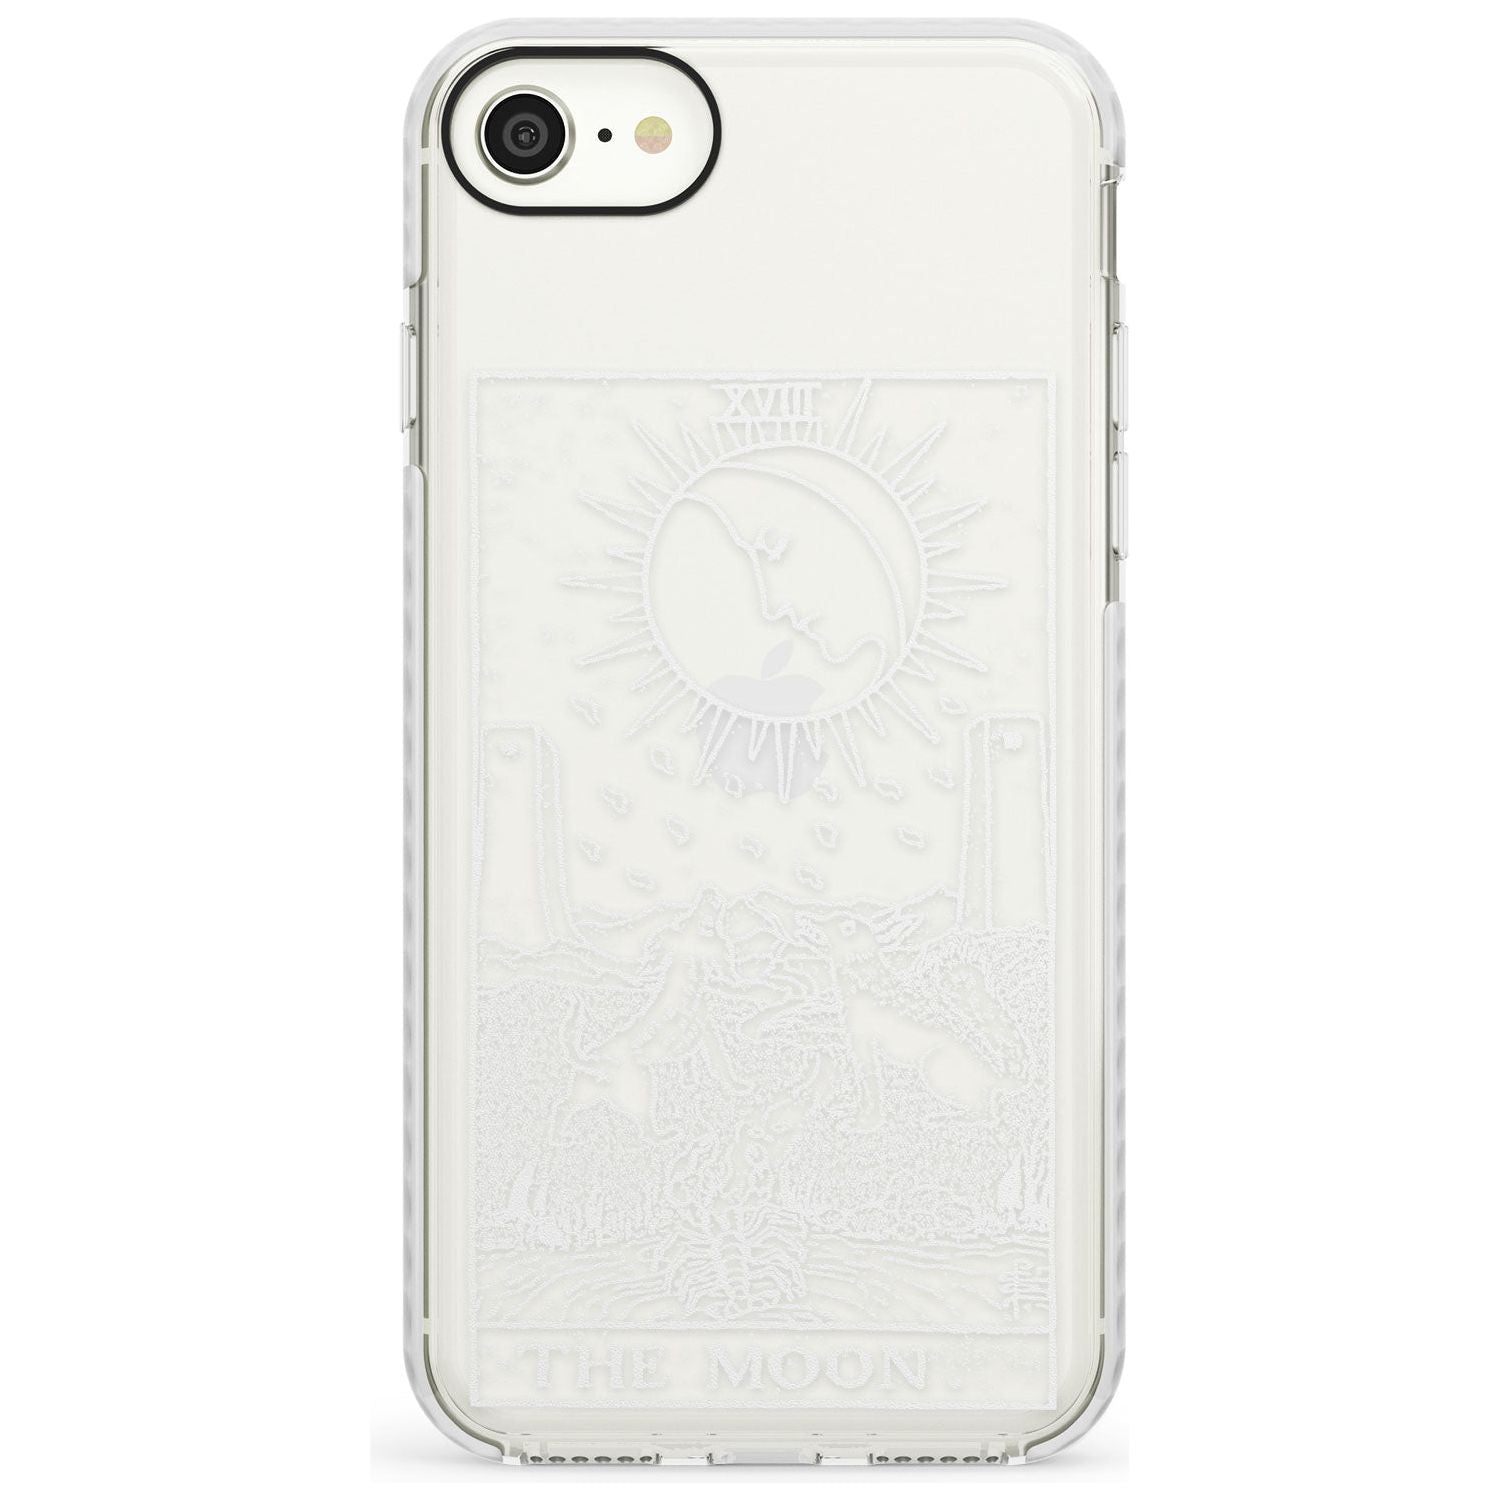 The Moon Tarot Card - White Transparent Slim TPU Phone Case for iPhone SE 8 7 Plus